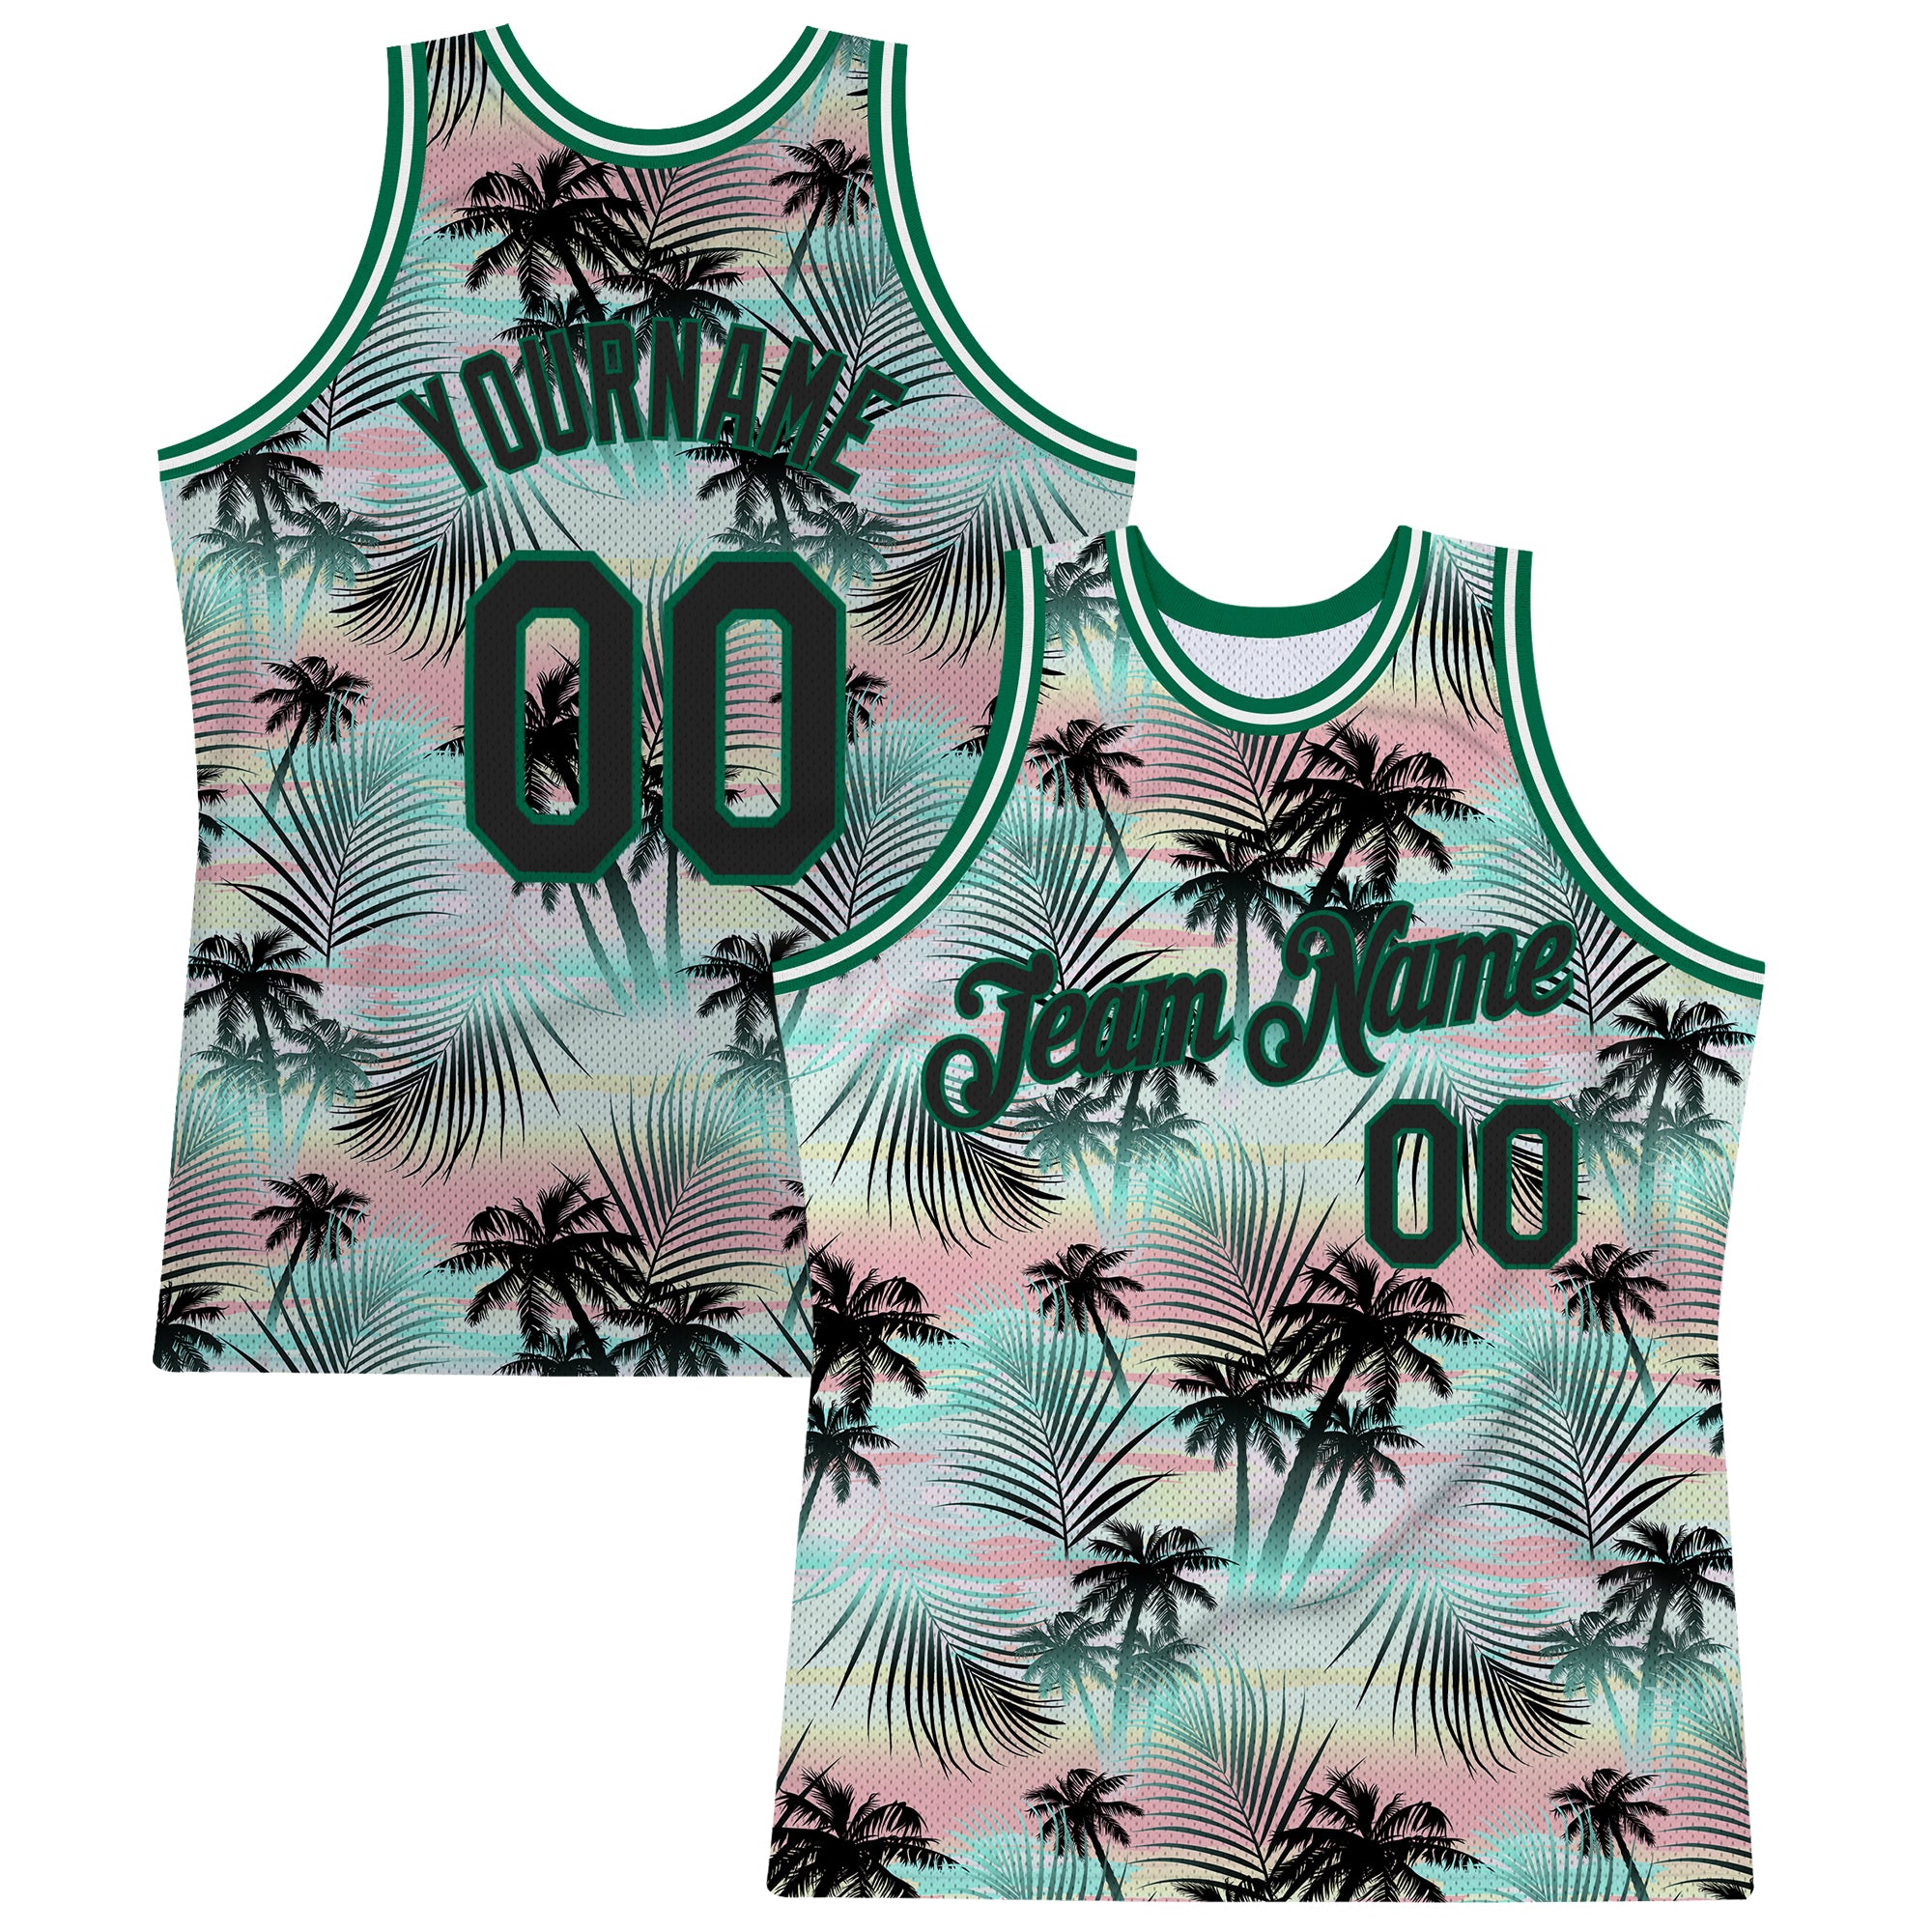 Floral Design Sublimated Basketball Jersey